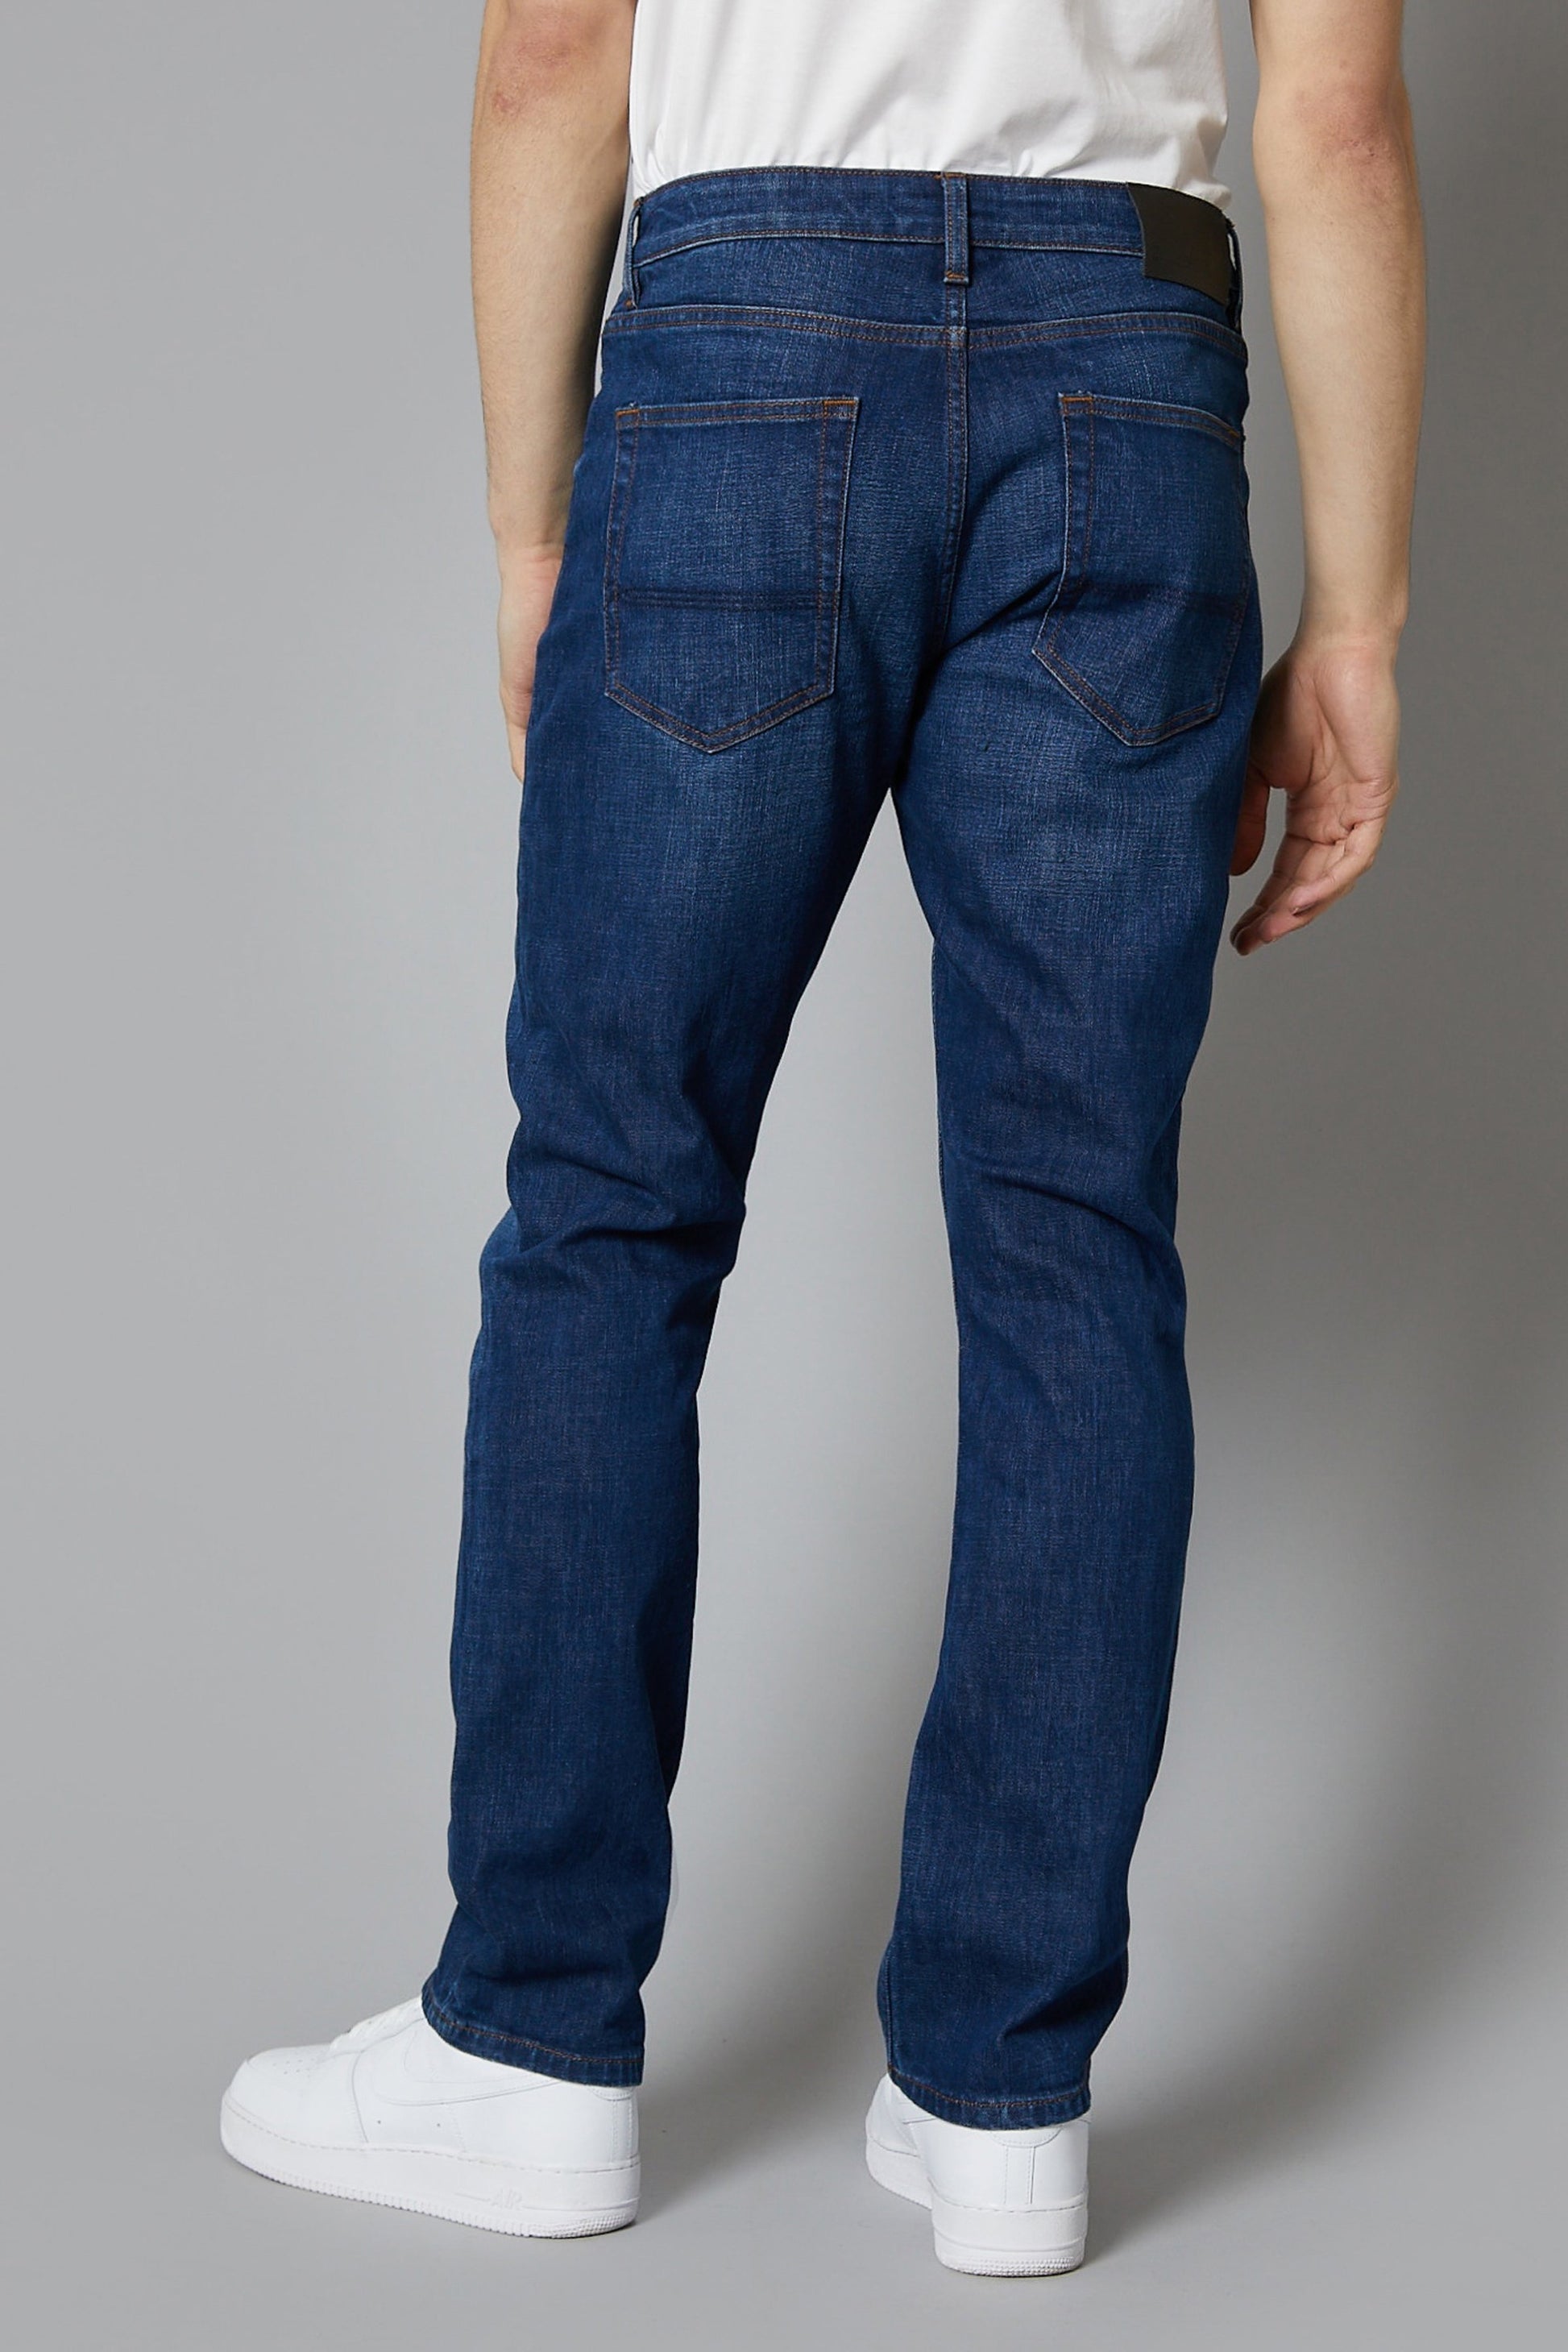 DML Jeans Alaska mens dark blue straight leg denim jeans back view